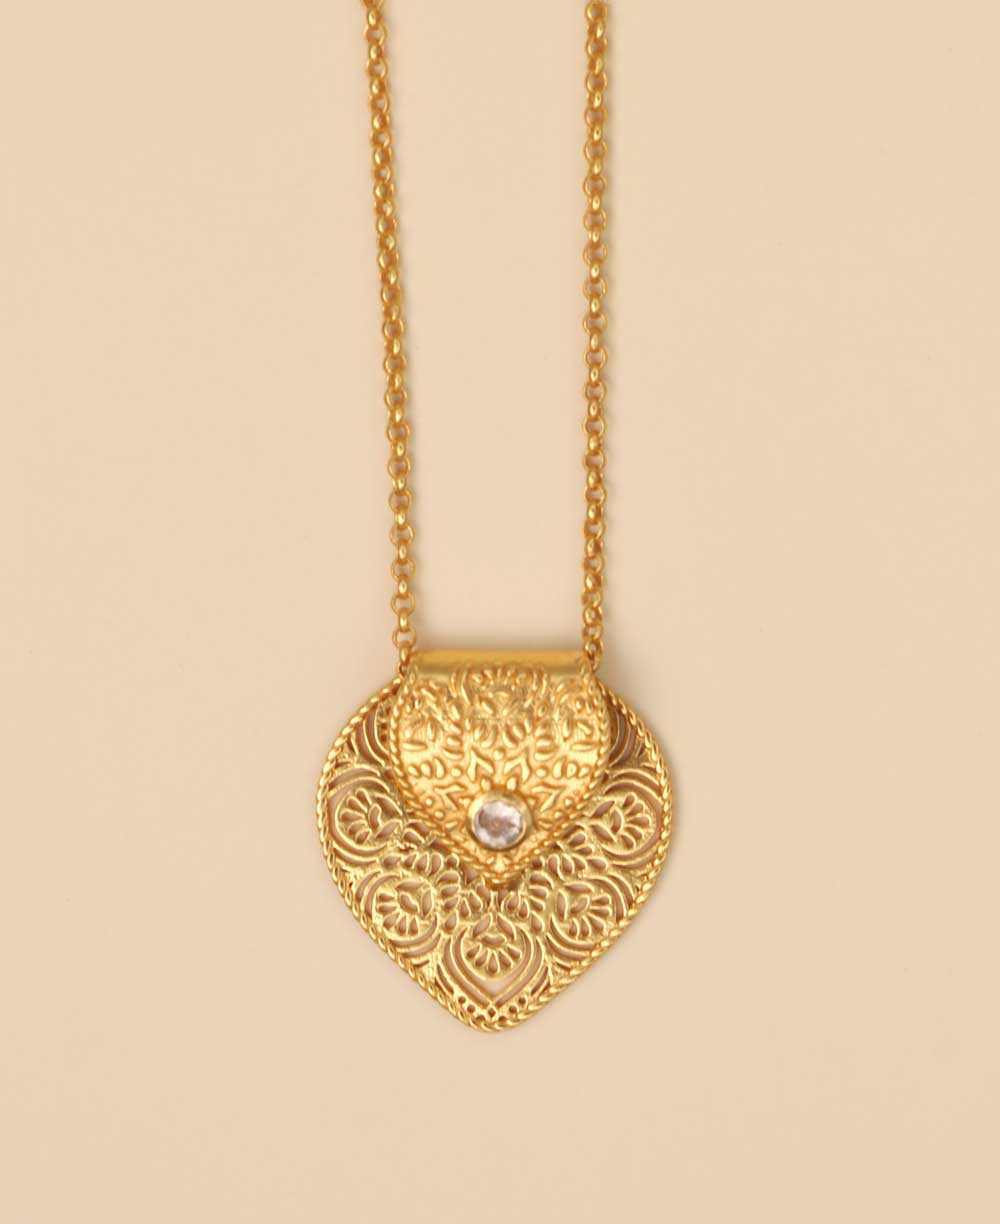 Birthstone Gemstone Gold Plated Brass Lotus Petal Mandala Necklace - Necklaces April (White Topaz)